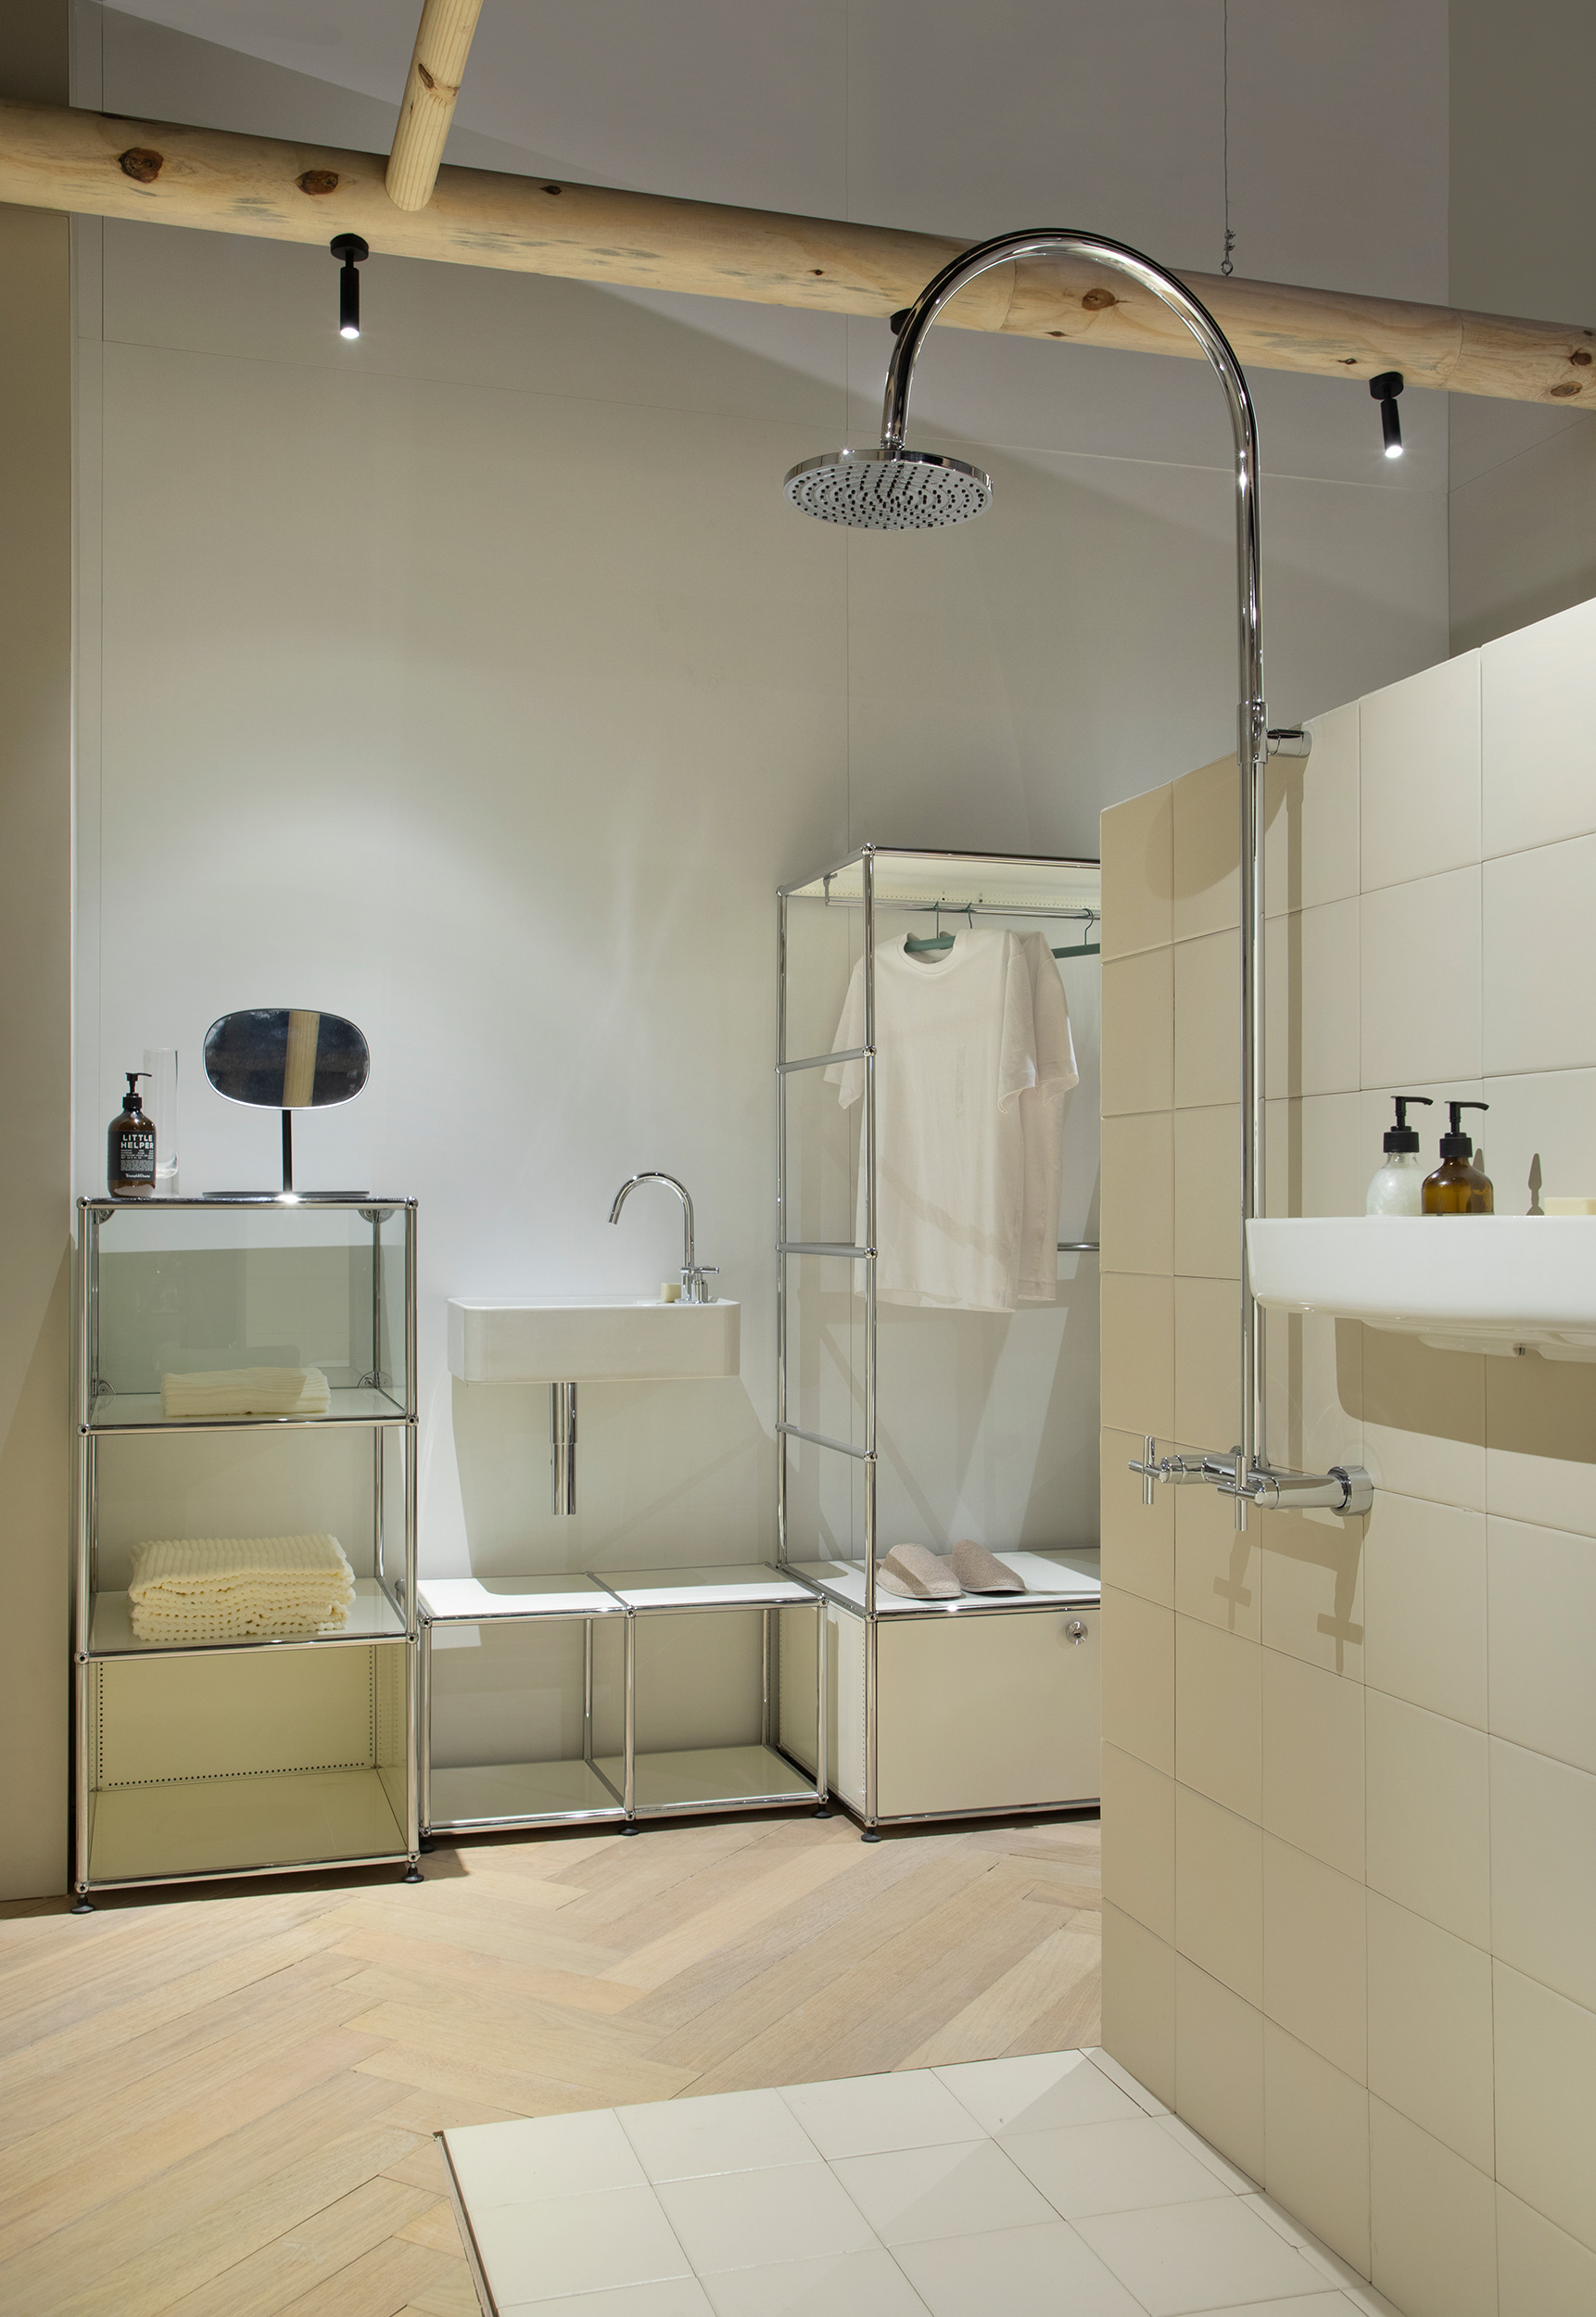 tufi mousse arquitetura studio alfi casacor sao paulo 2022 decor mostra decoracao banheiro chuveiro